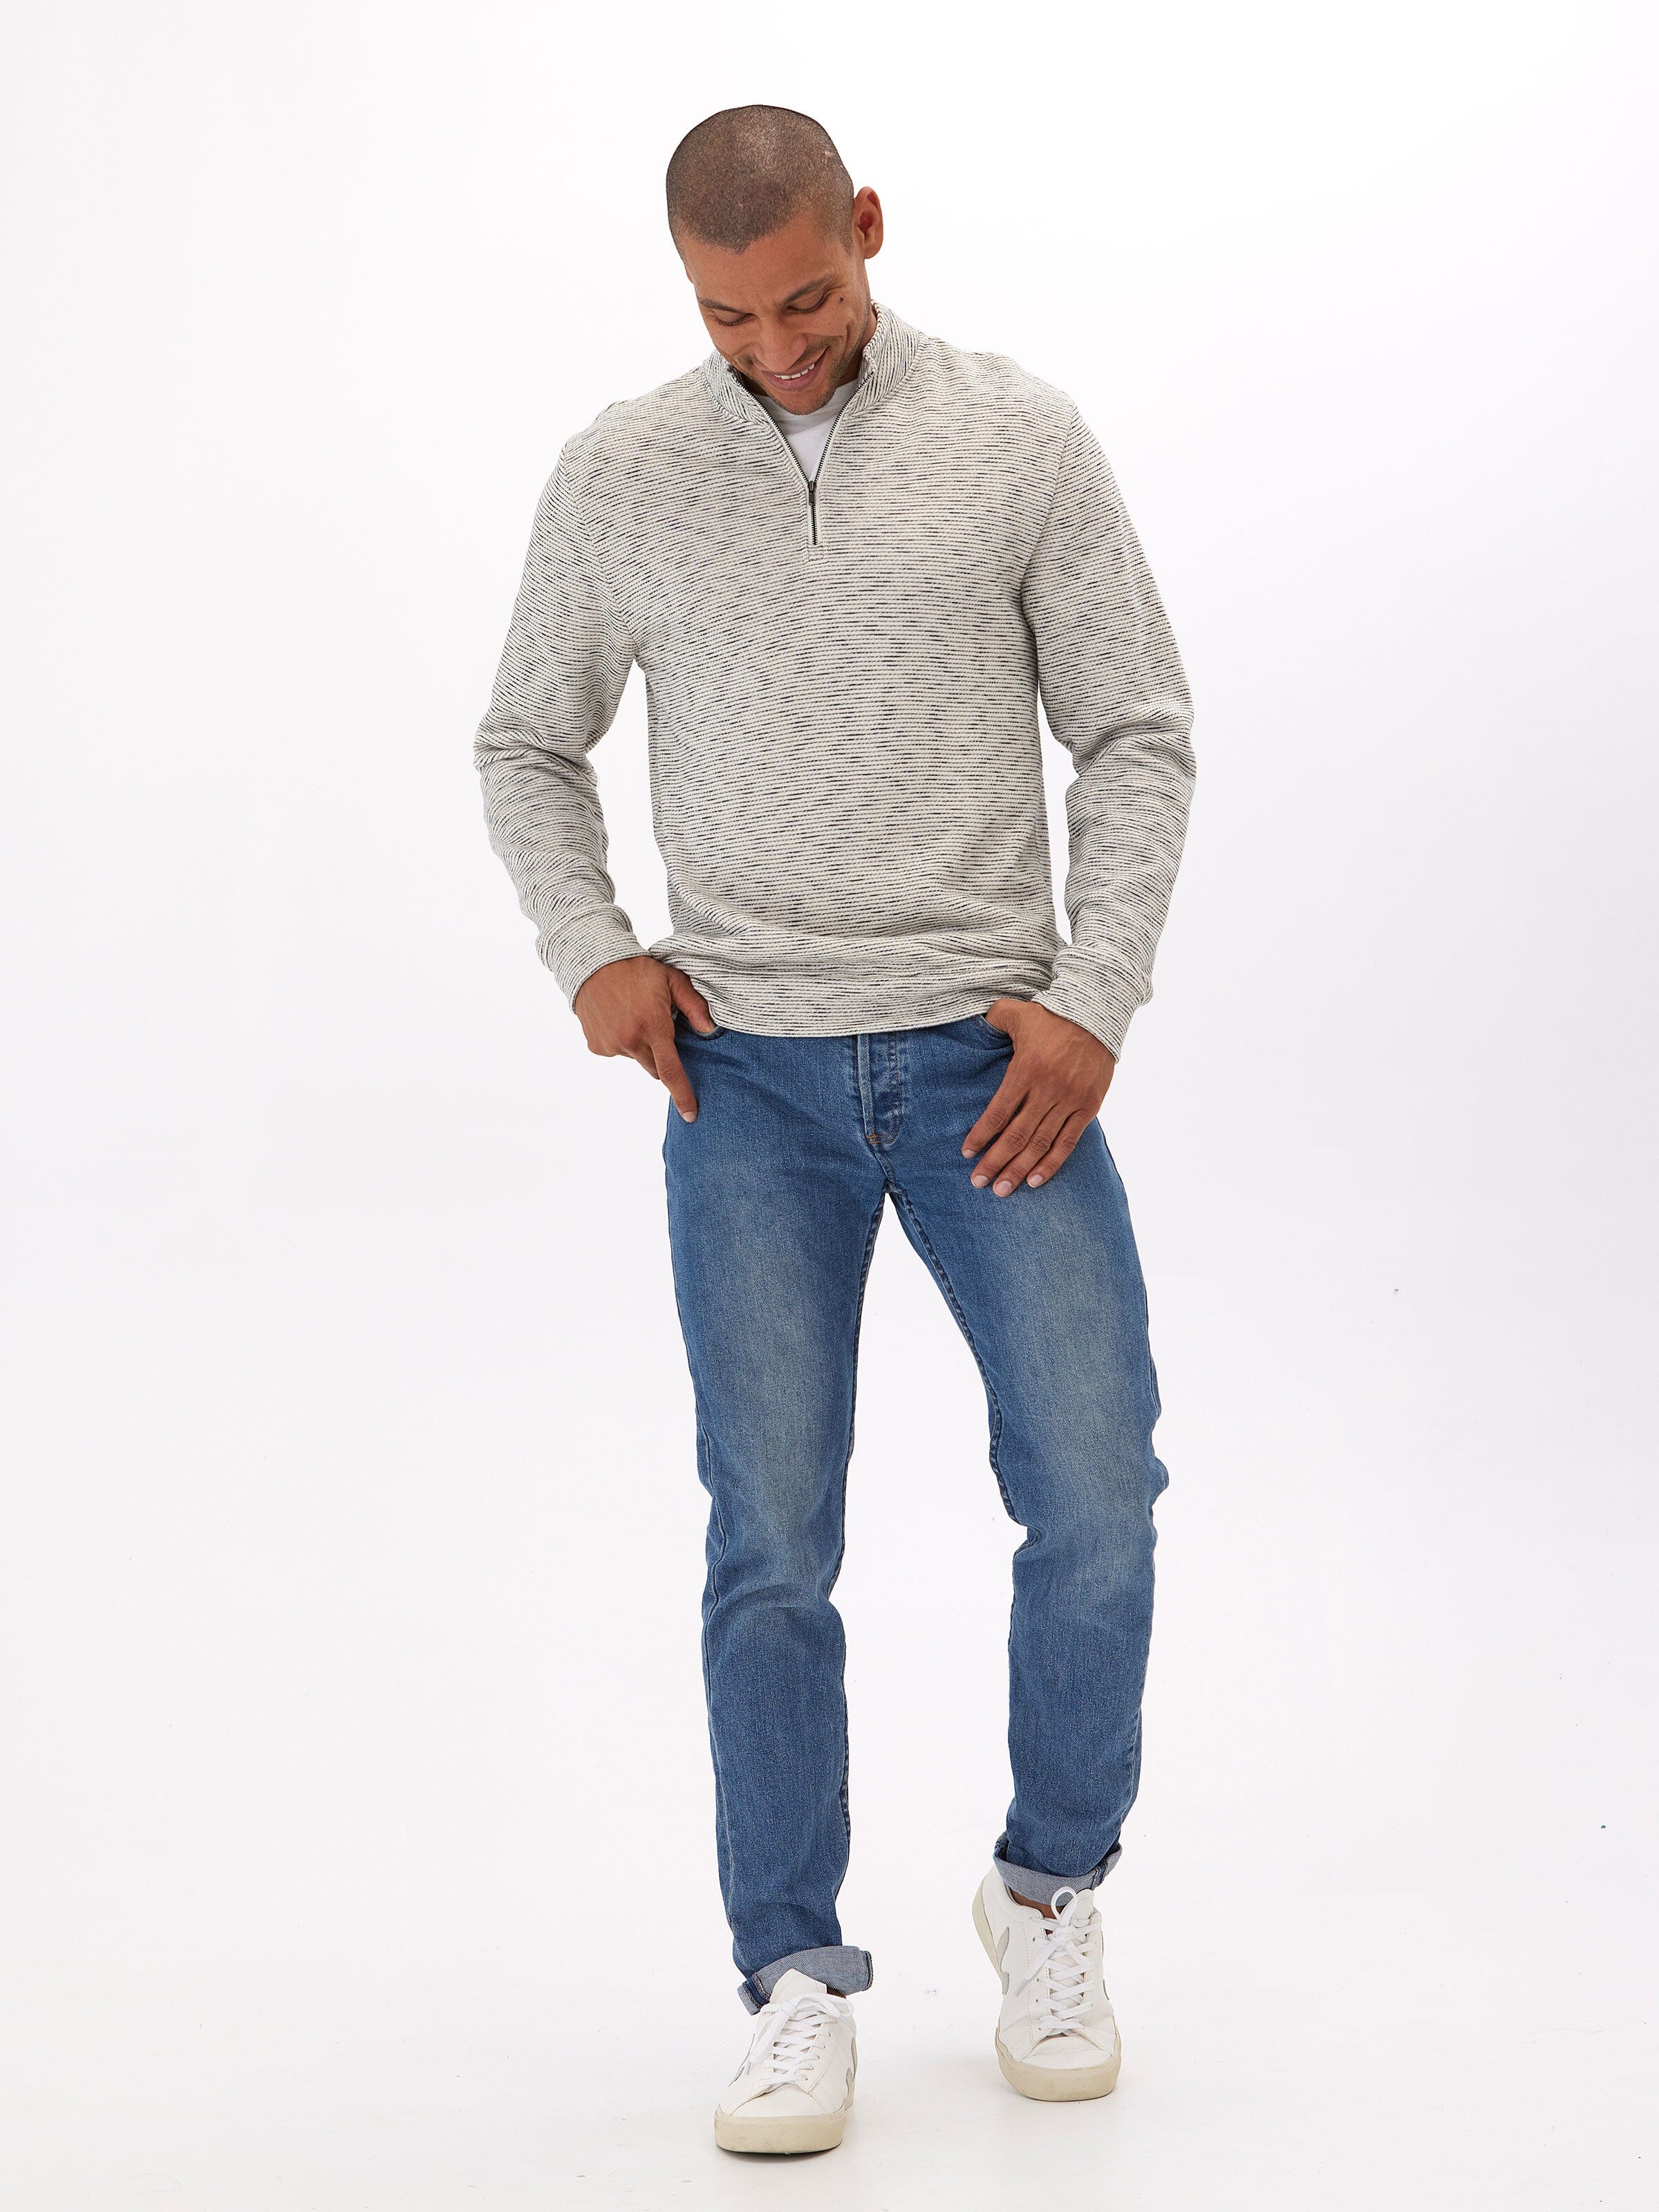 Felix Stripe Terry 1/4 Zip Pullover Mens Outerwear Sweatshirt Threads 4 Thought 